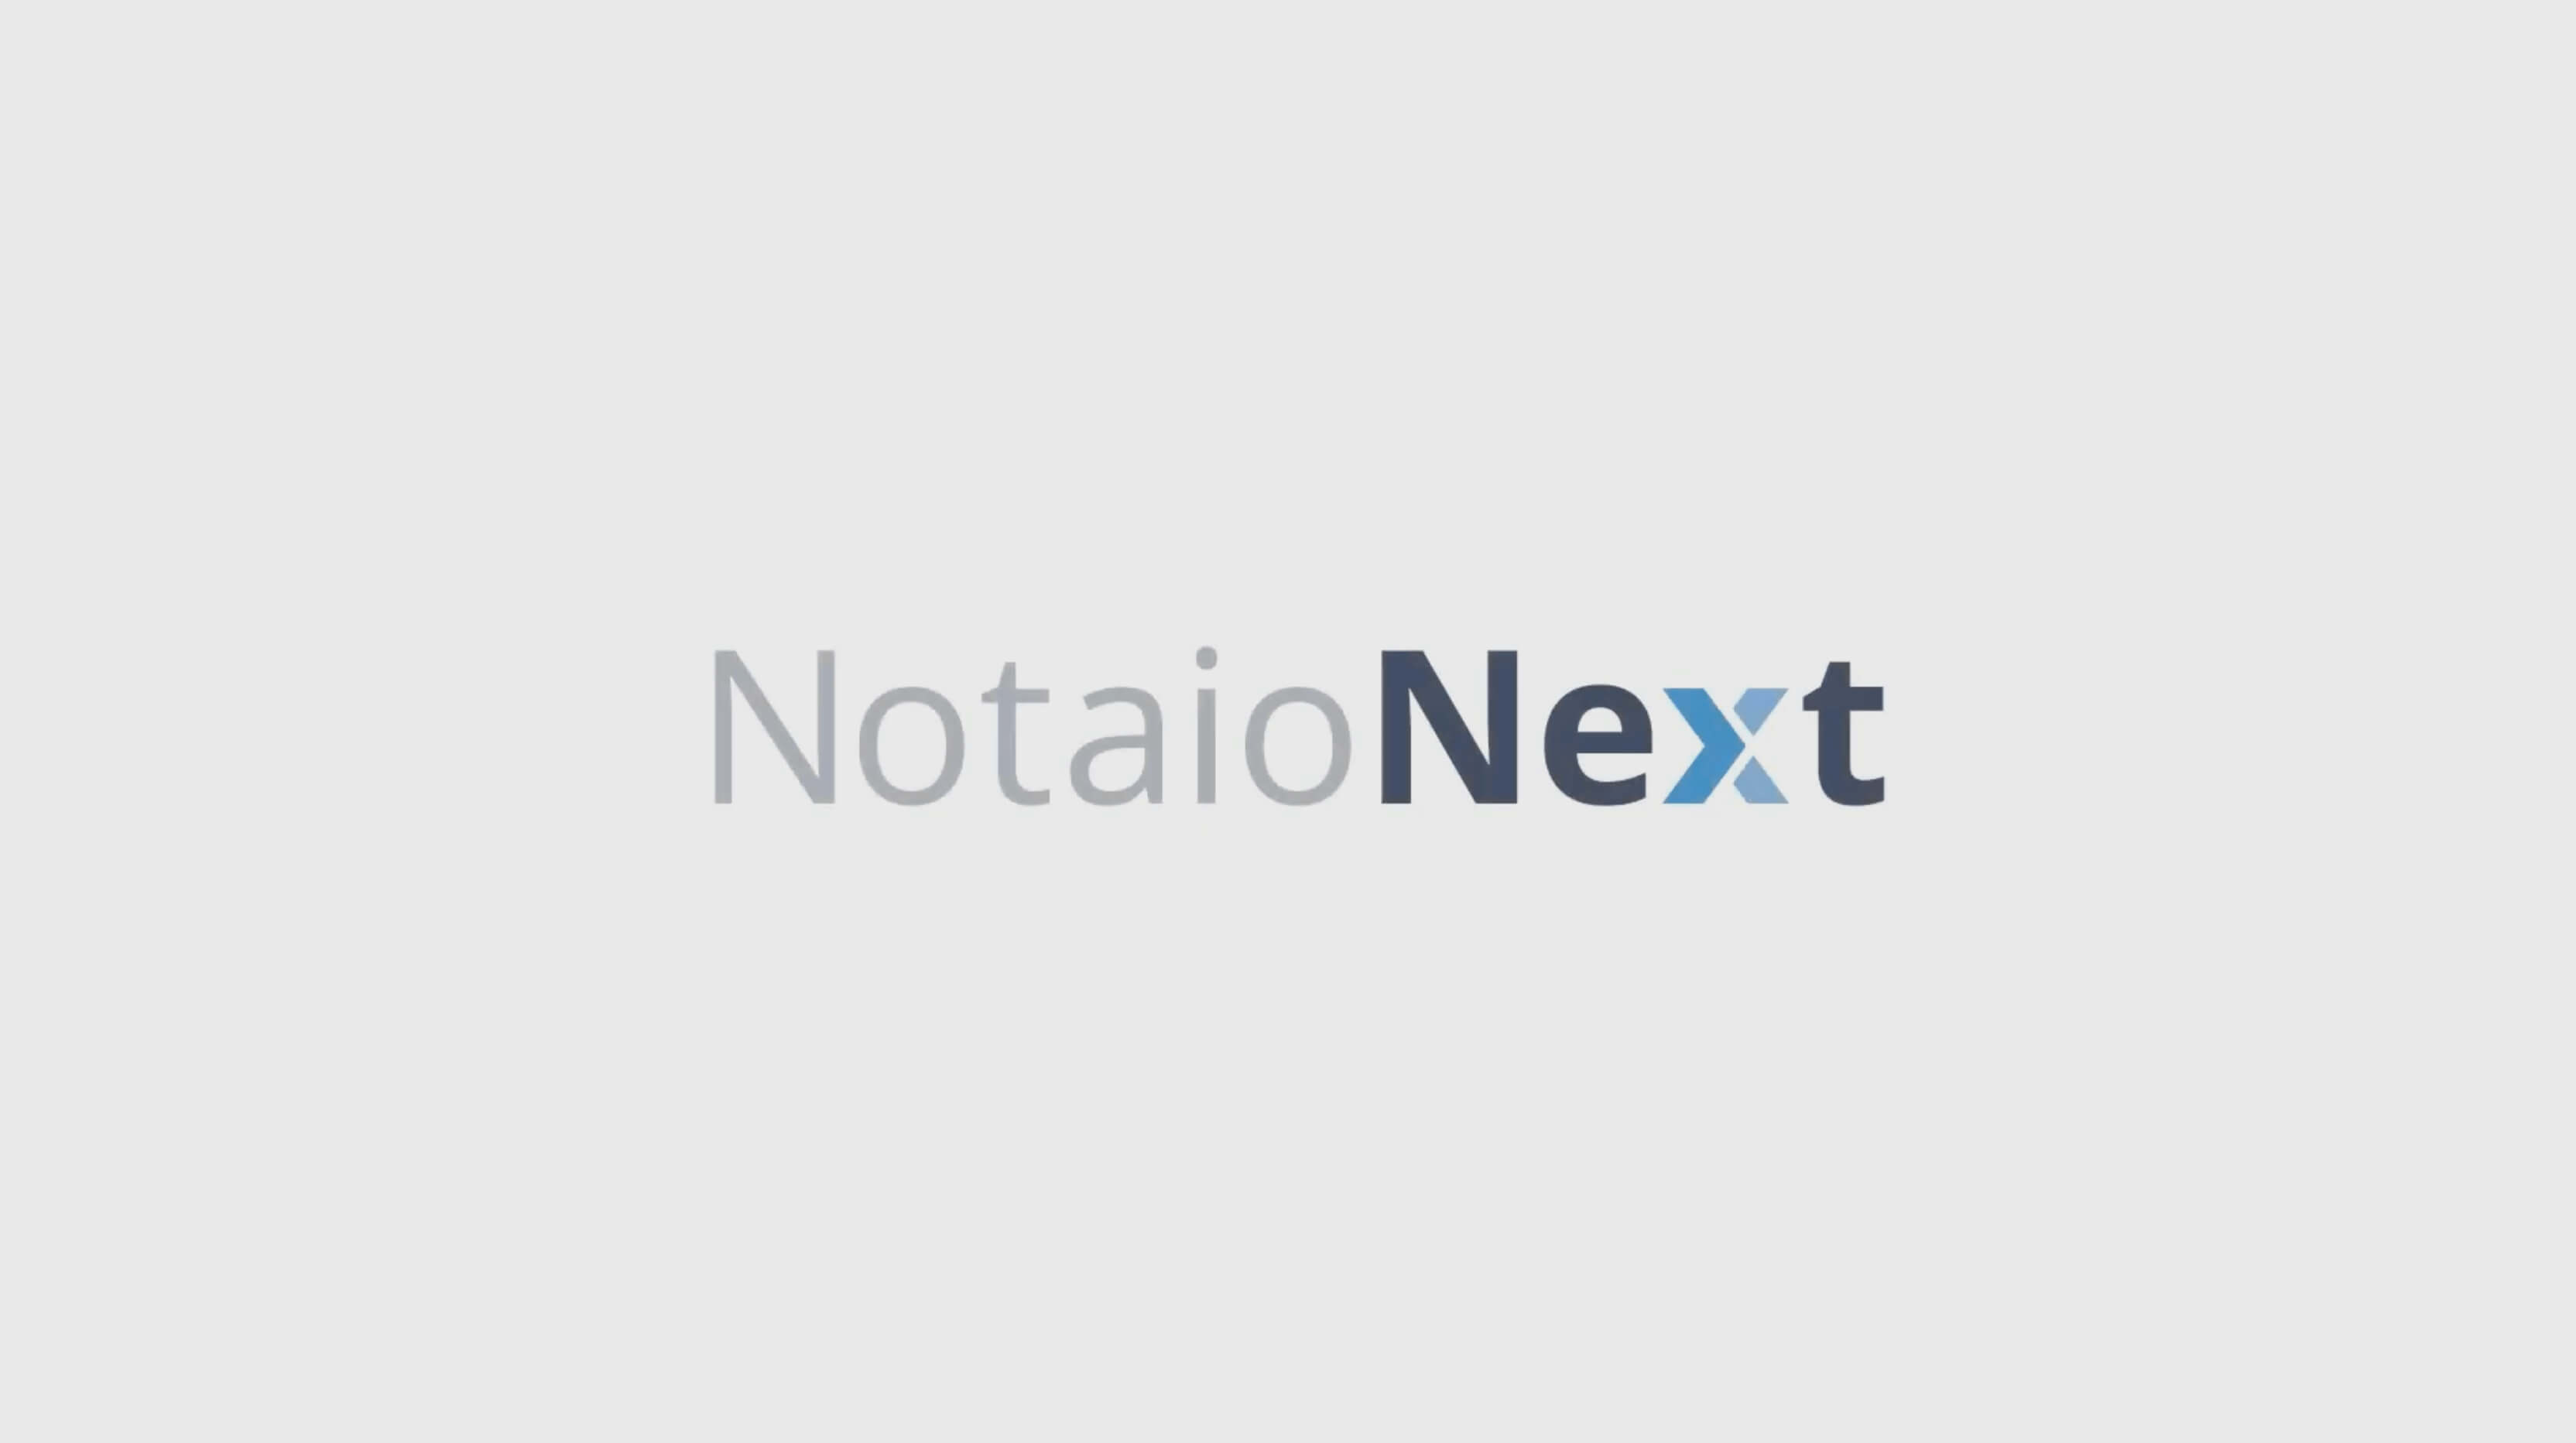 Notaio Next | Video